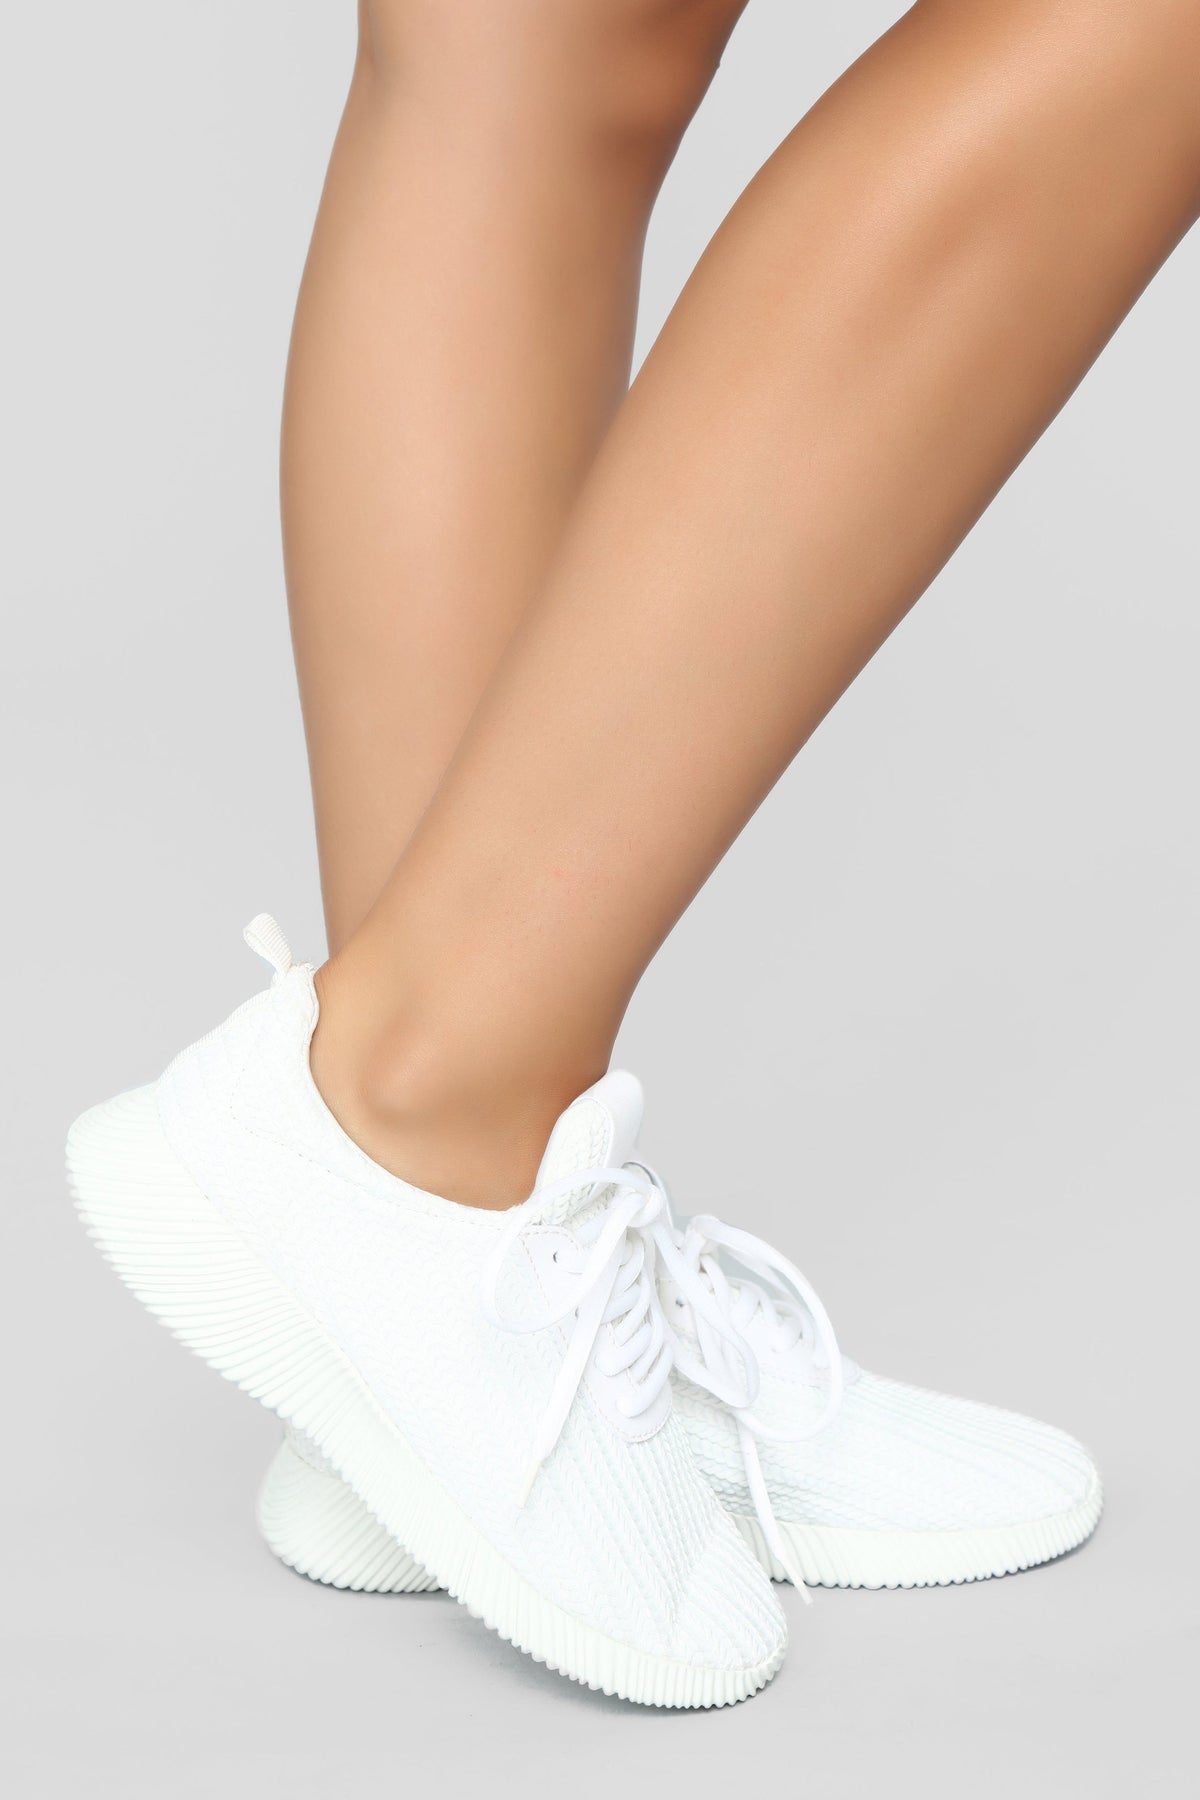 Kick Start Sneaker - White